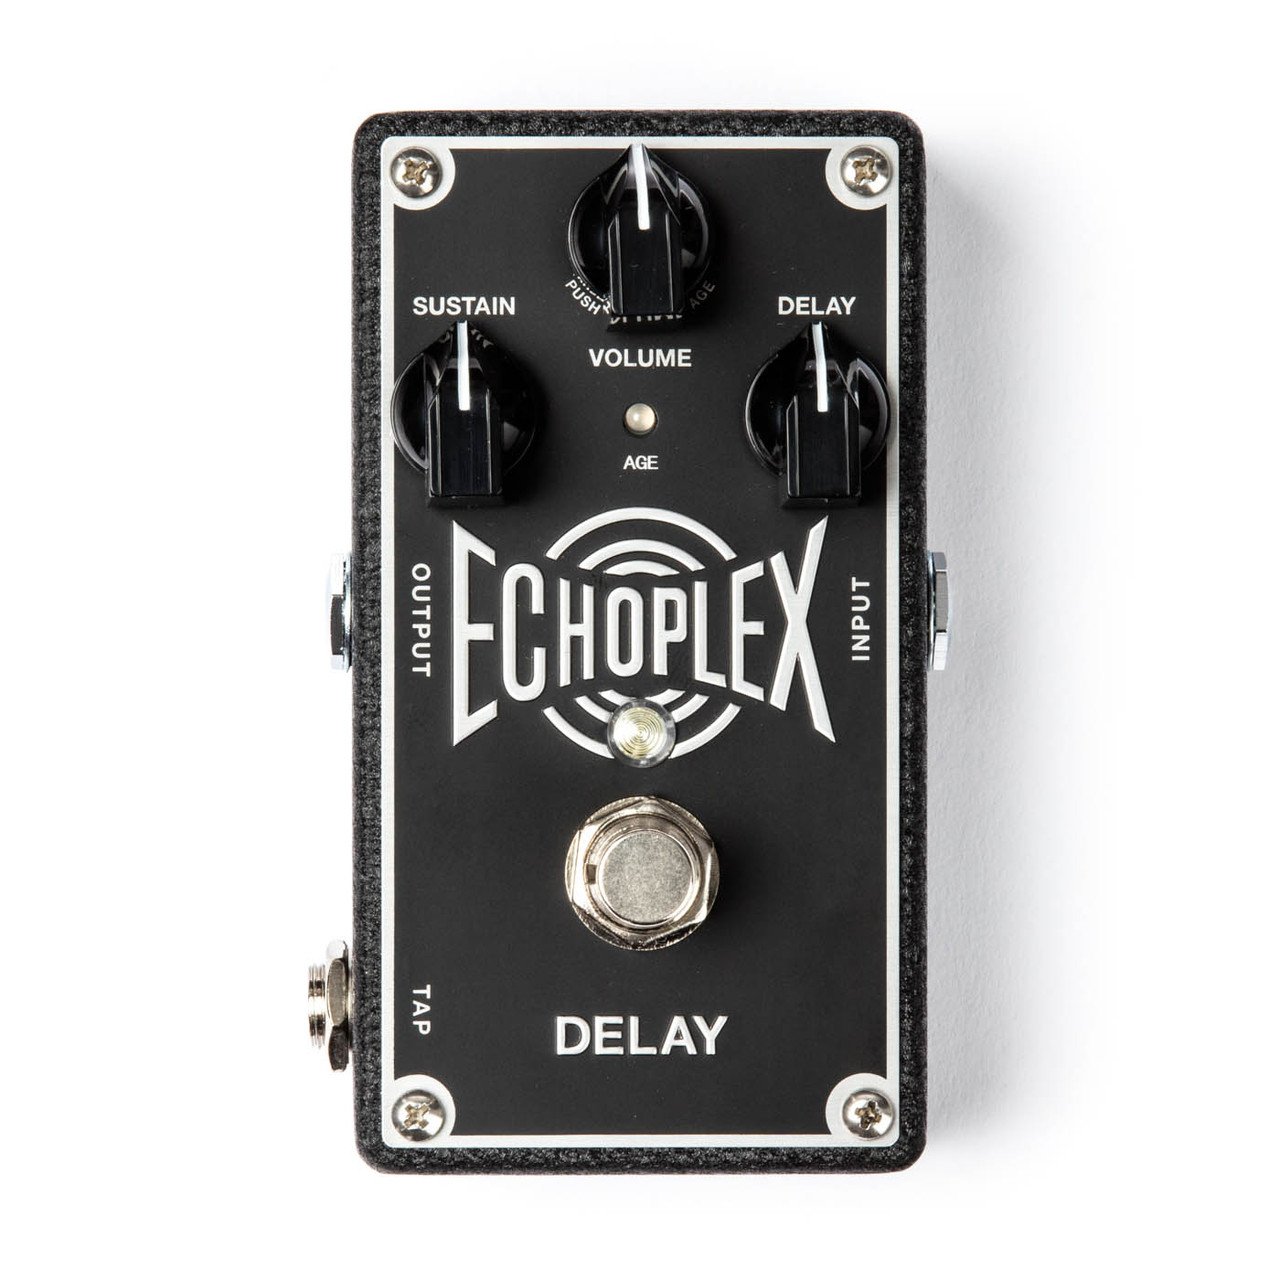 Dunlop Echoplex Delay Guitar Effects Pedal - EP103